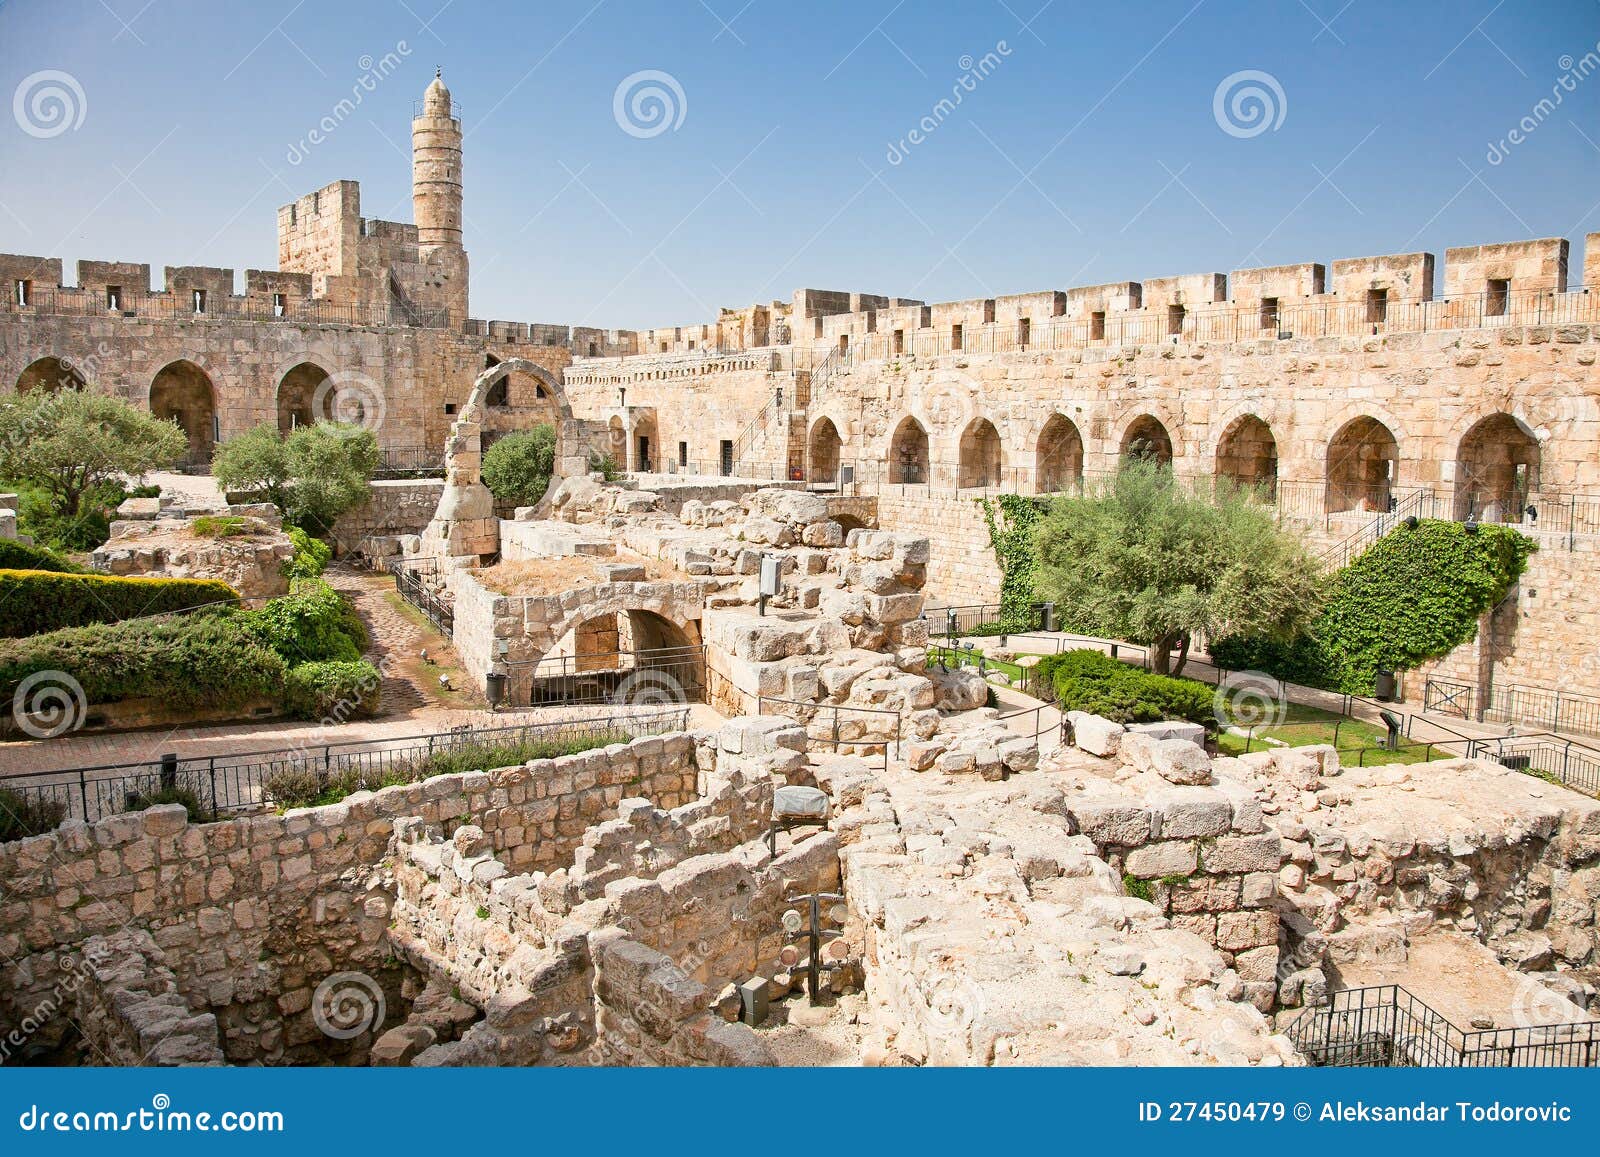 tower of david in jerusalem, israel